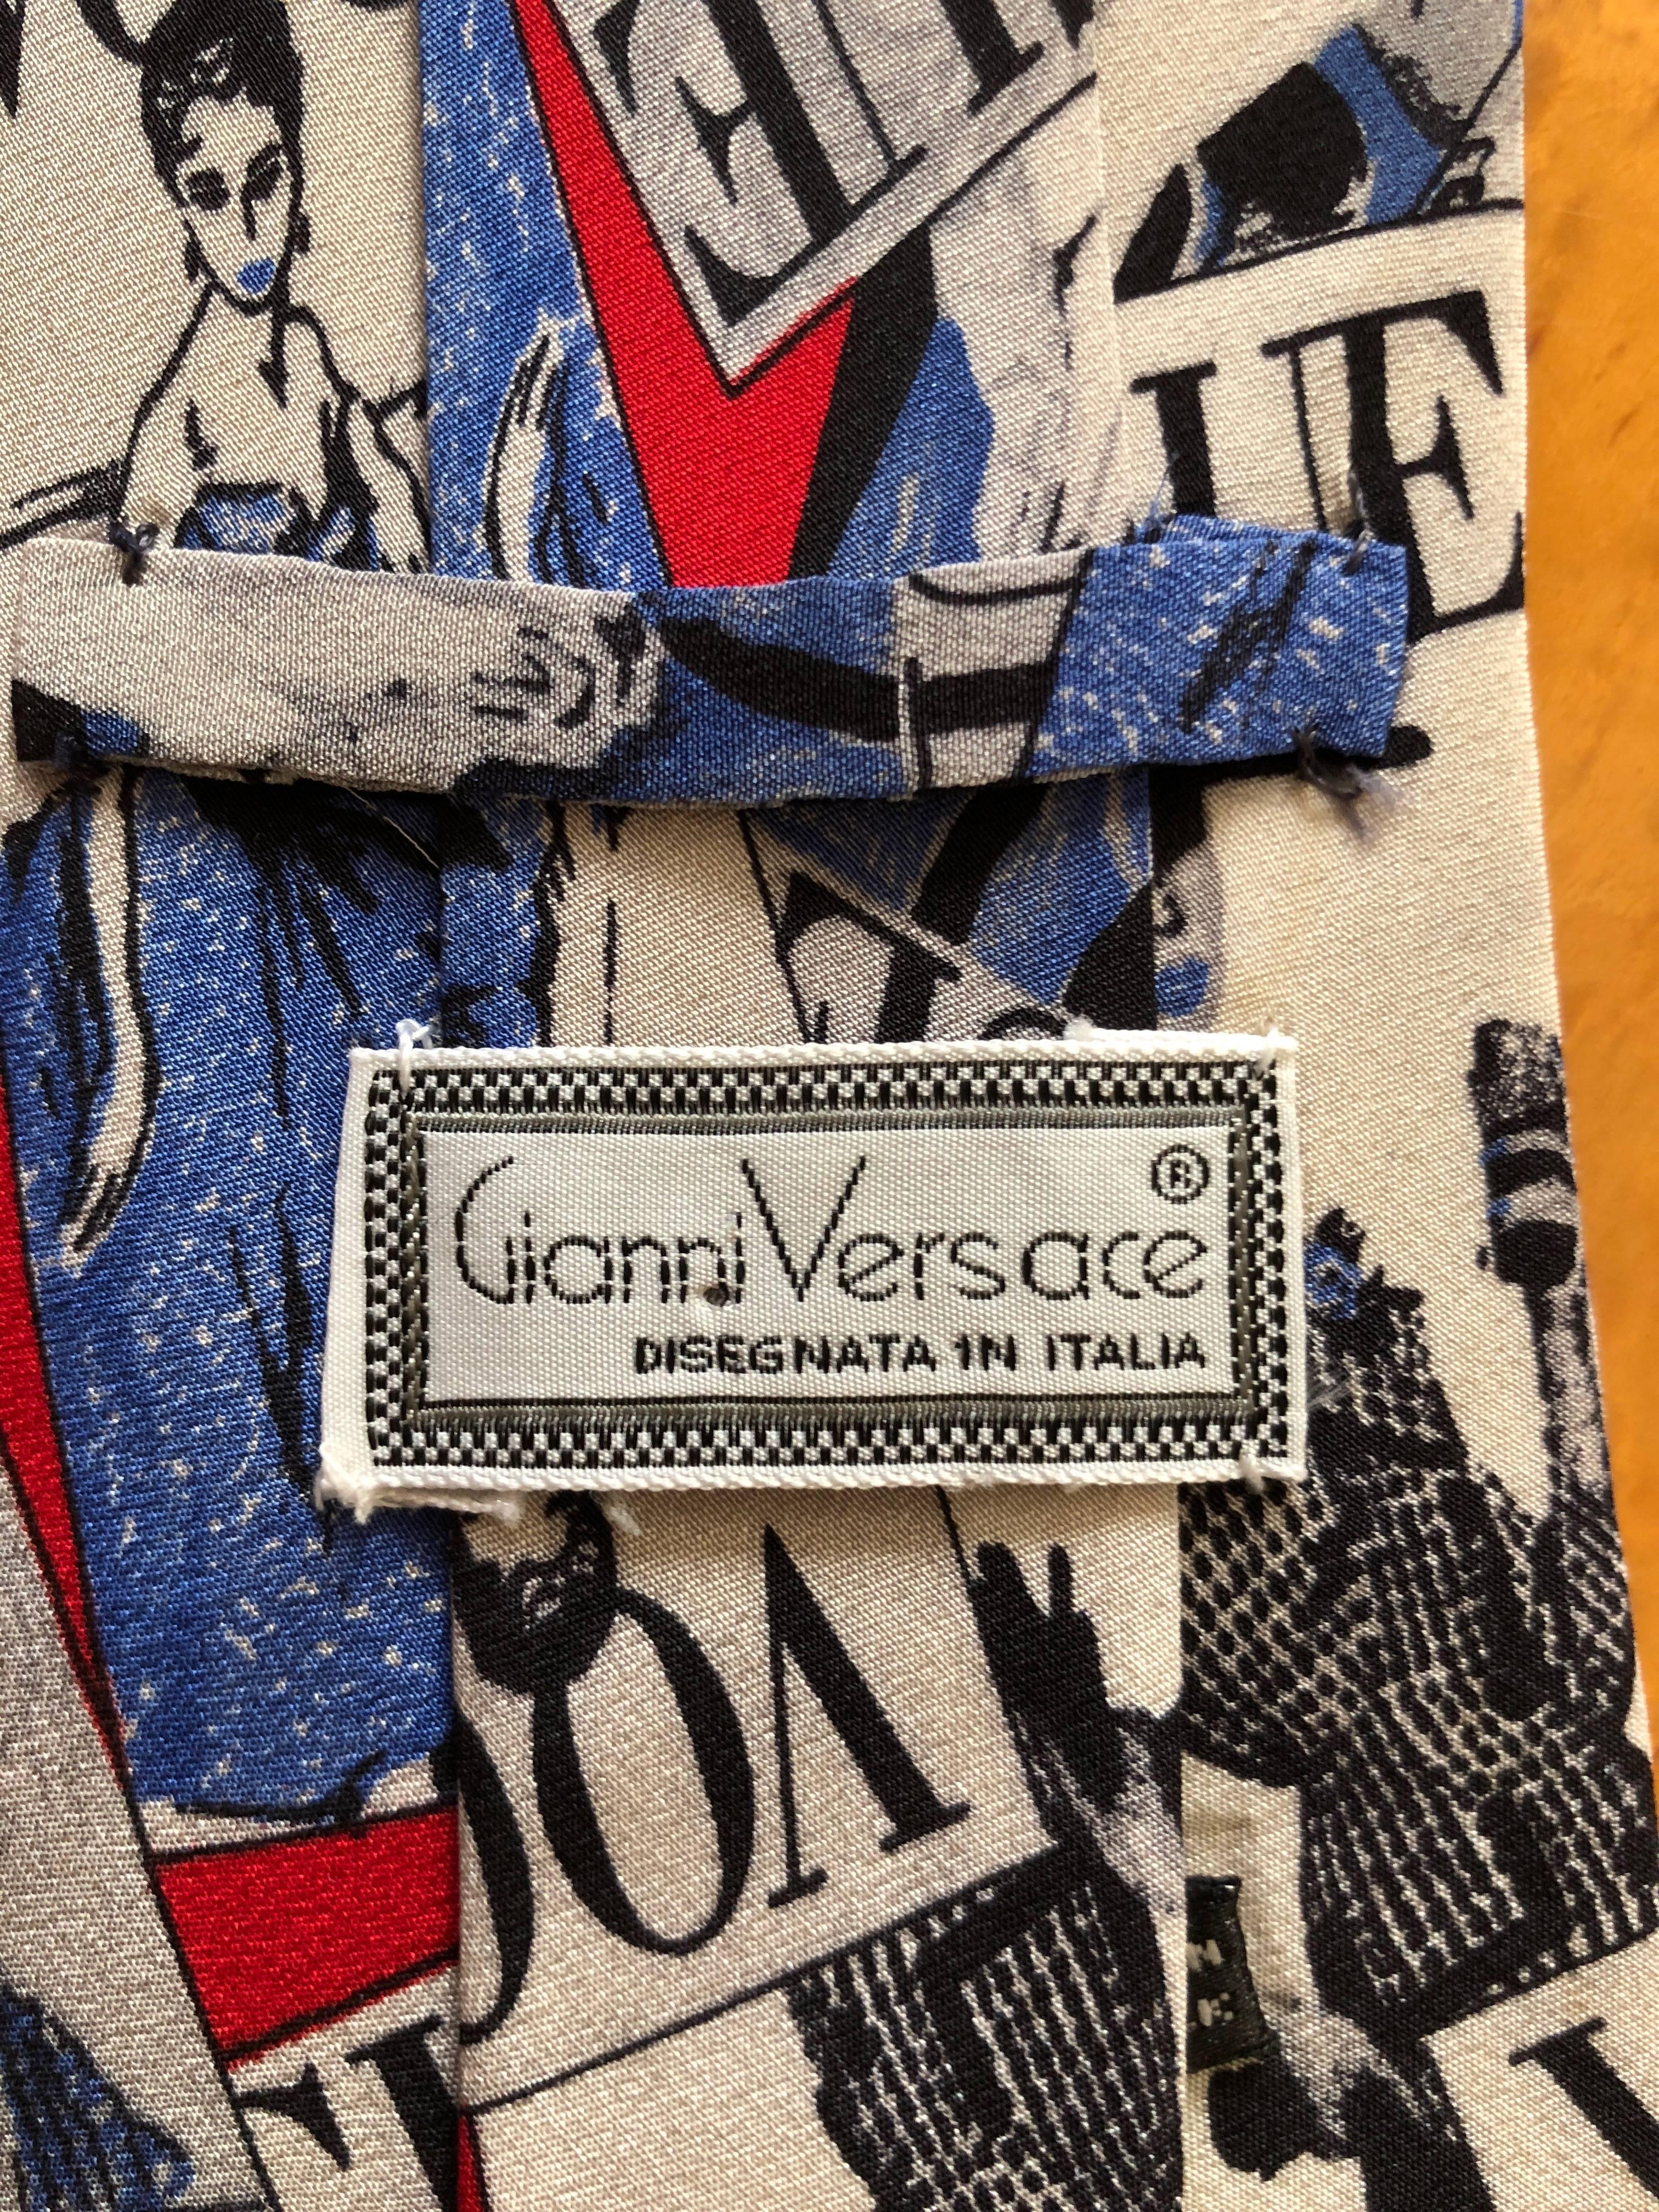 Gianni Versace 1991 Vogue Cover Print Silk Neck Tie
Excellent condition